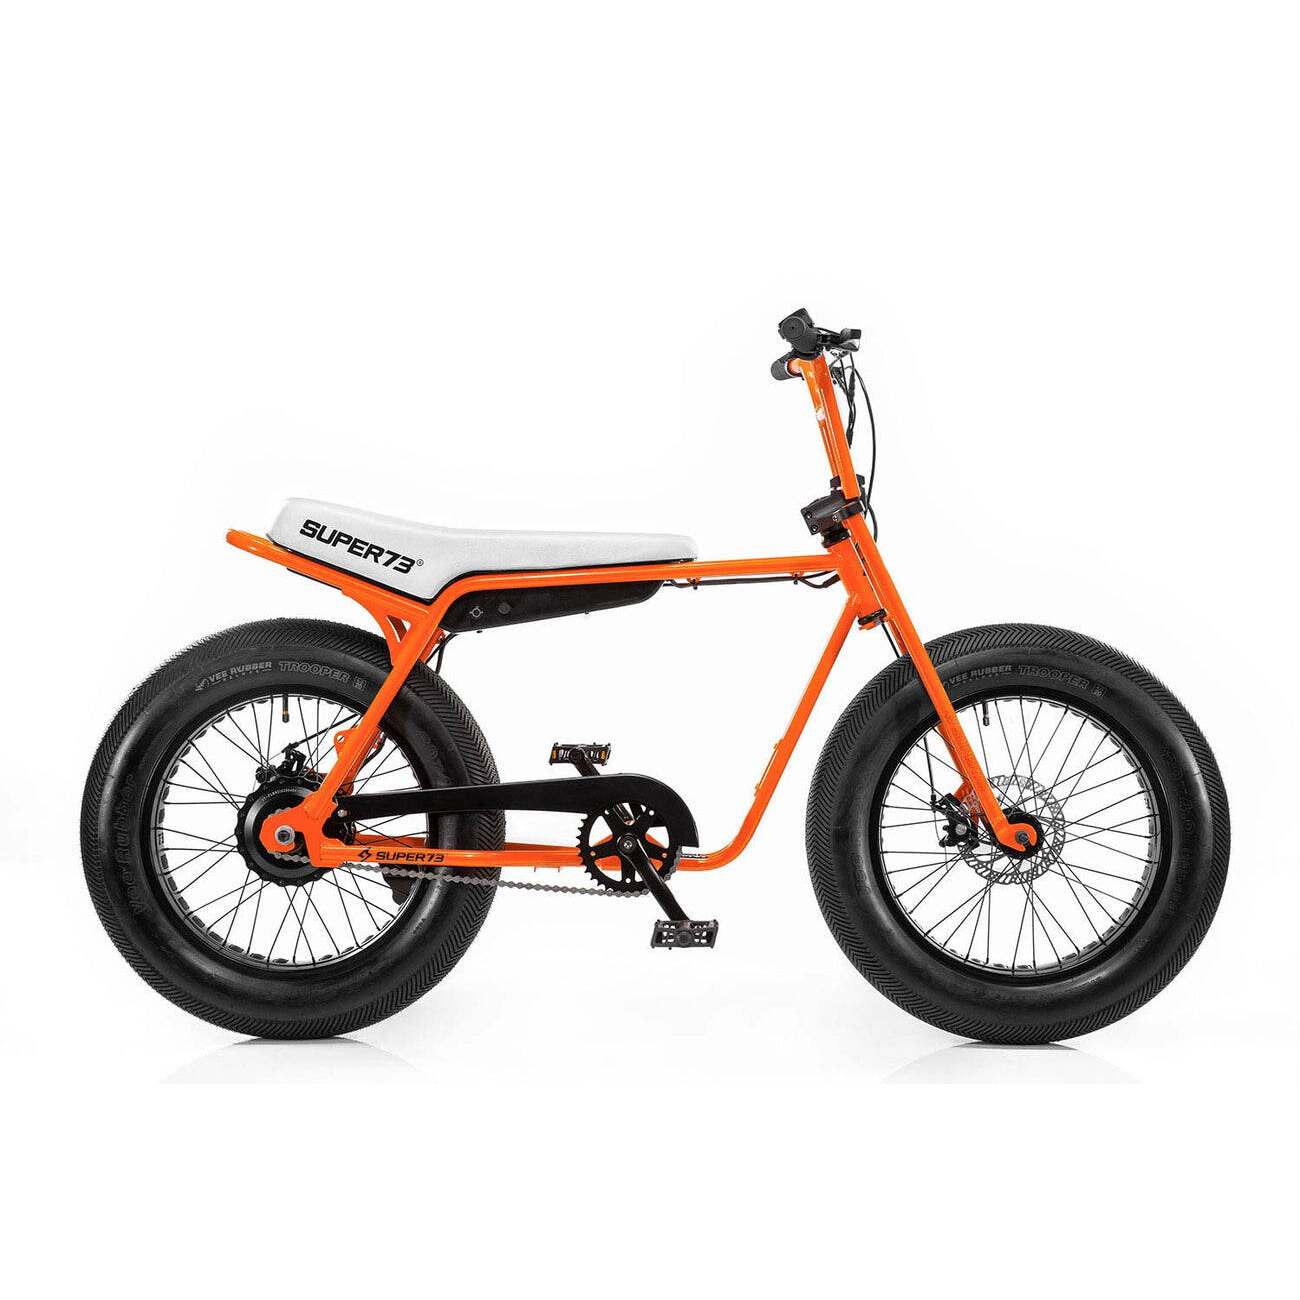 Super73 Z1 Electric Bike / Astro Orange in Qatar